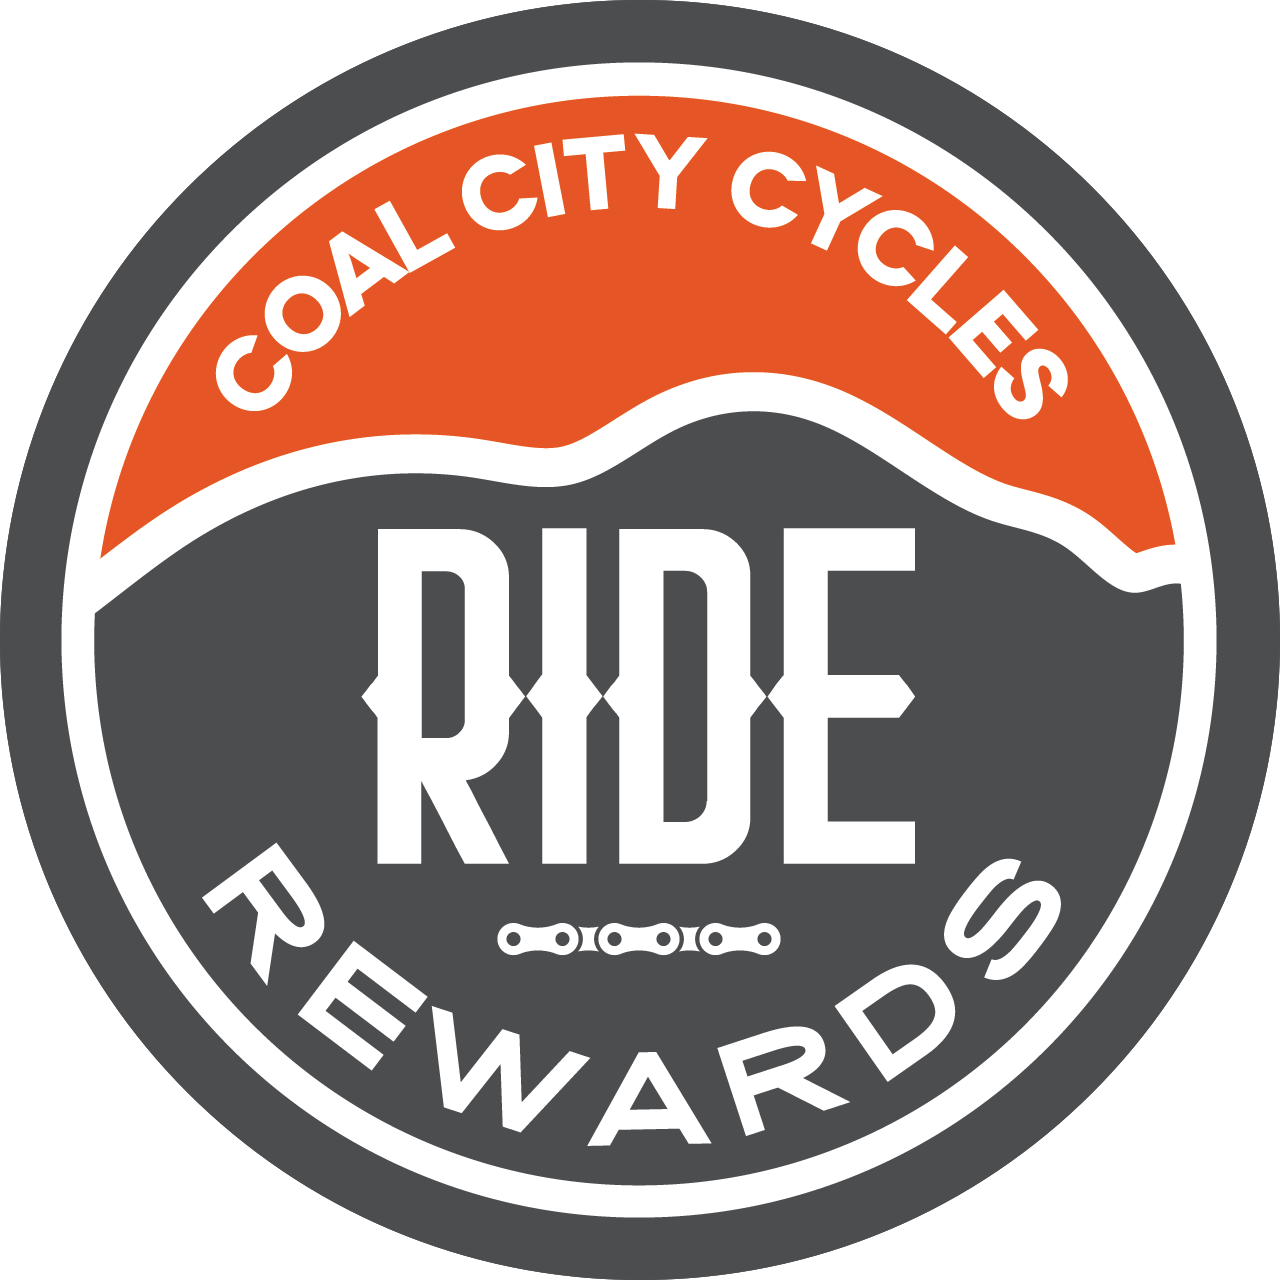 Coal City Cycles Ride Rewards